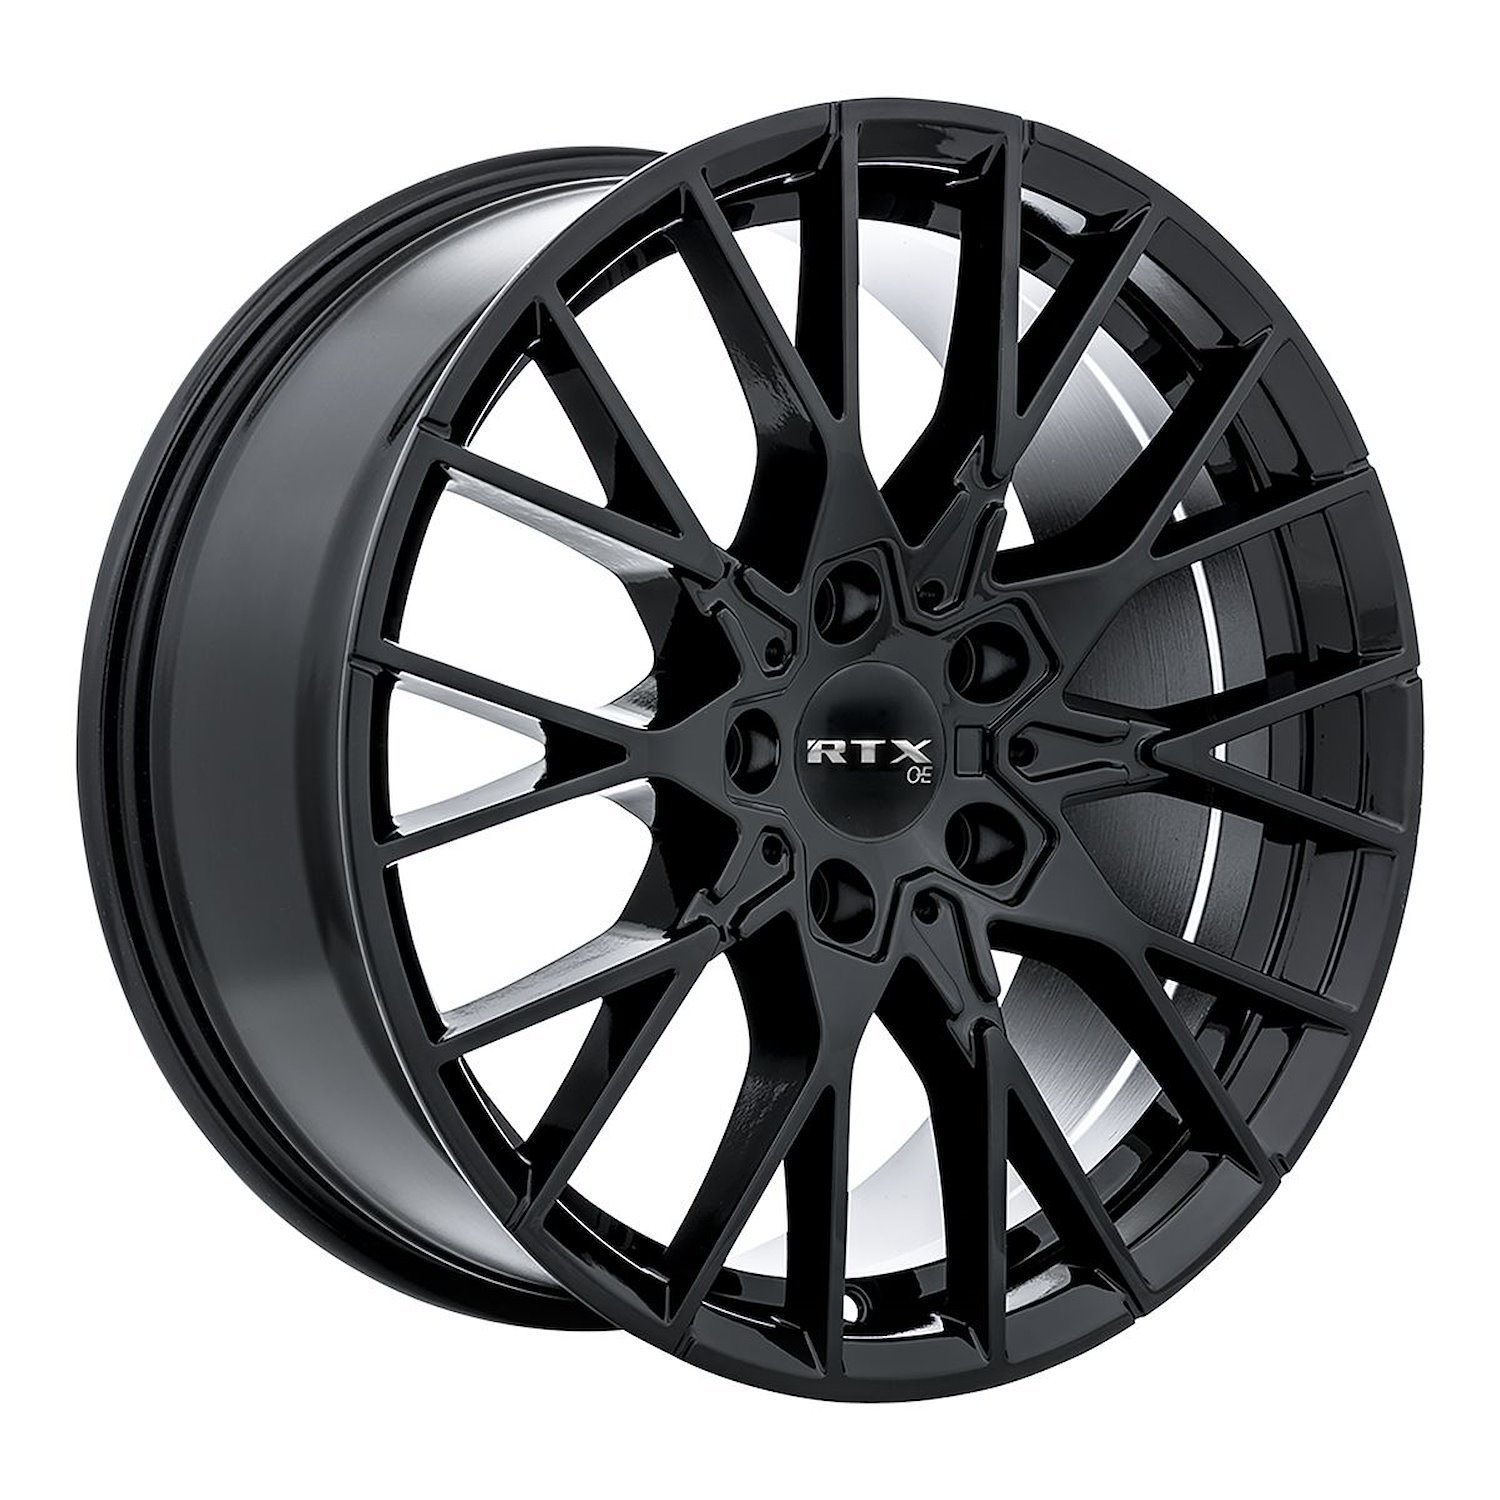 507411 OE-Series Beyreuth Wheel [Size: 18" x 8"] Gloss Black Finish